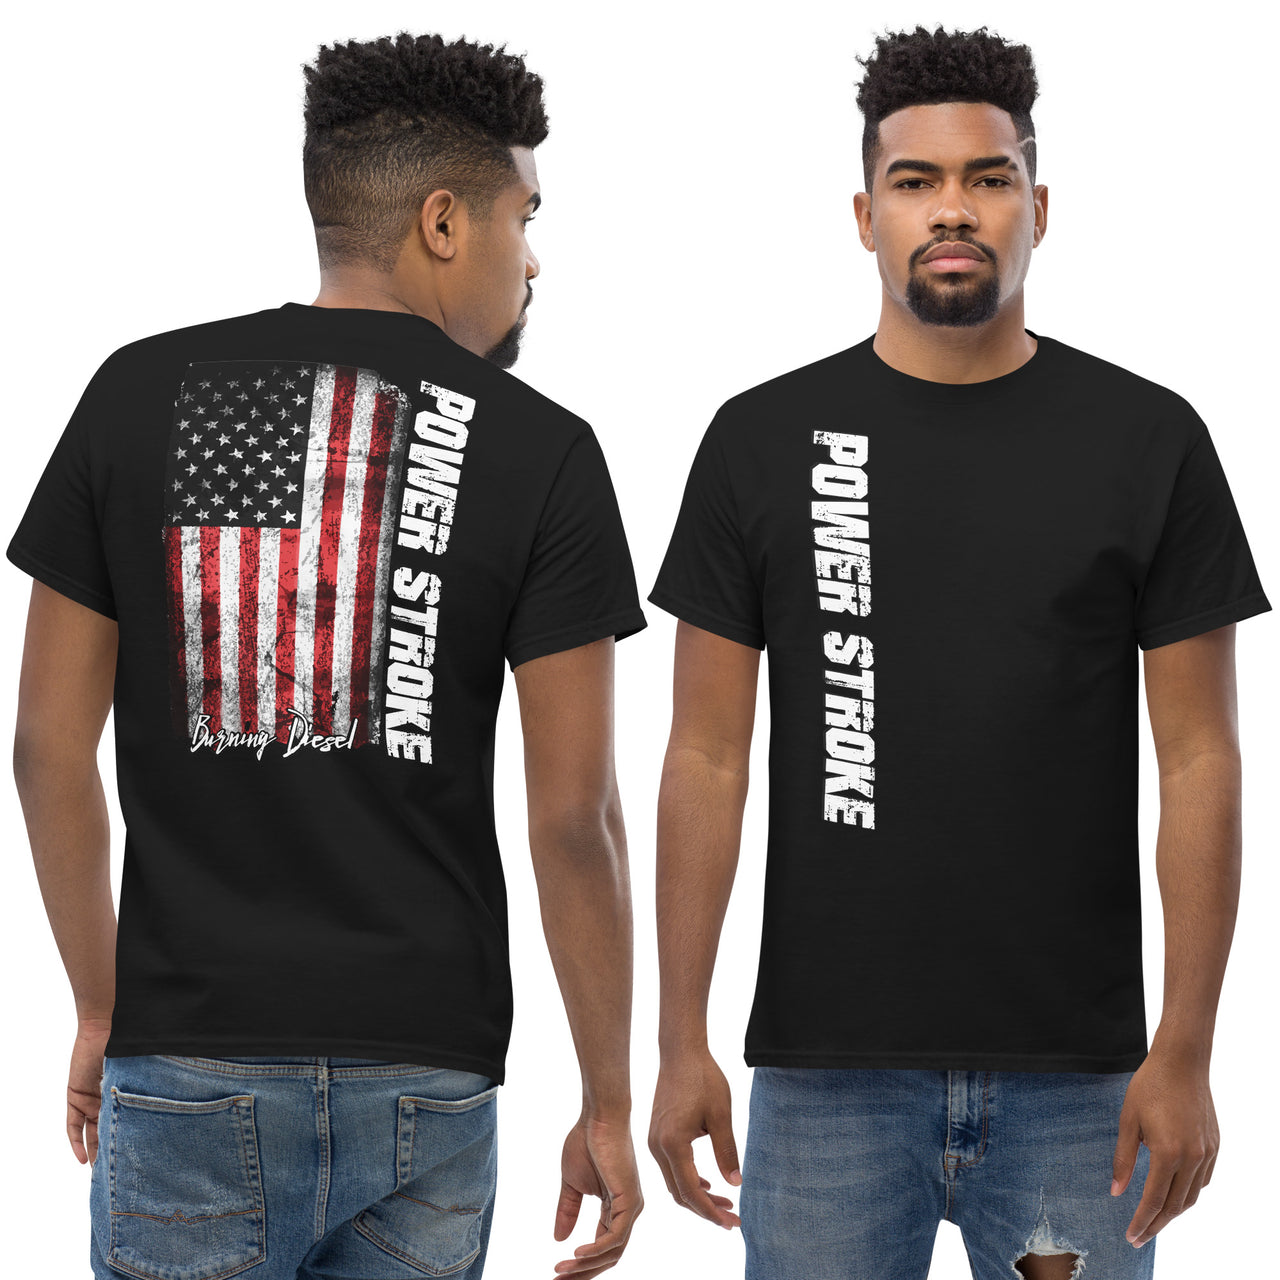 Power Stroke Diesel Shirt American Flag T-Shirt modeled in black from Aggressive Thread